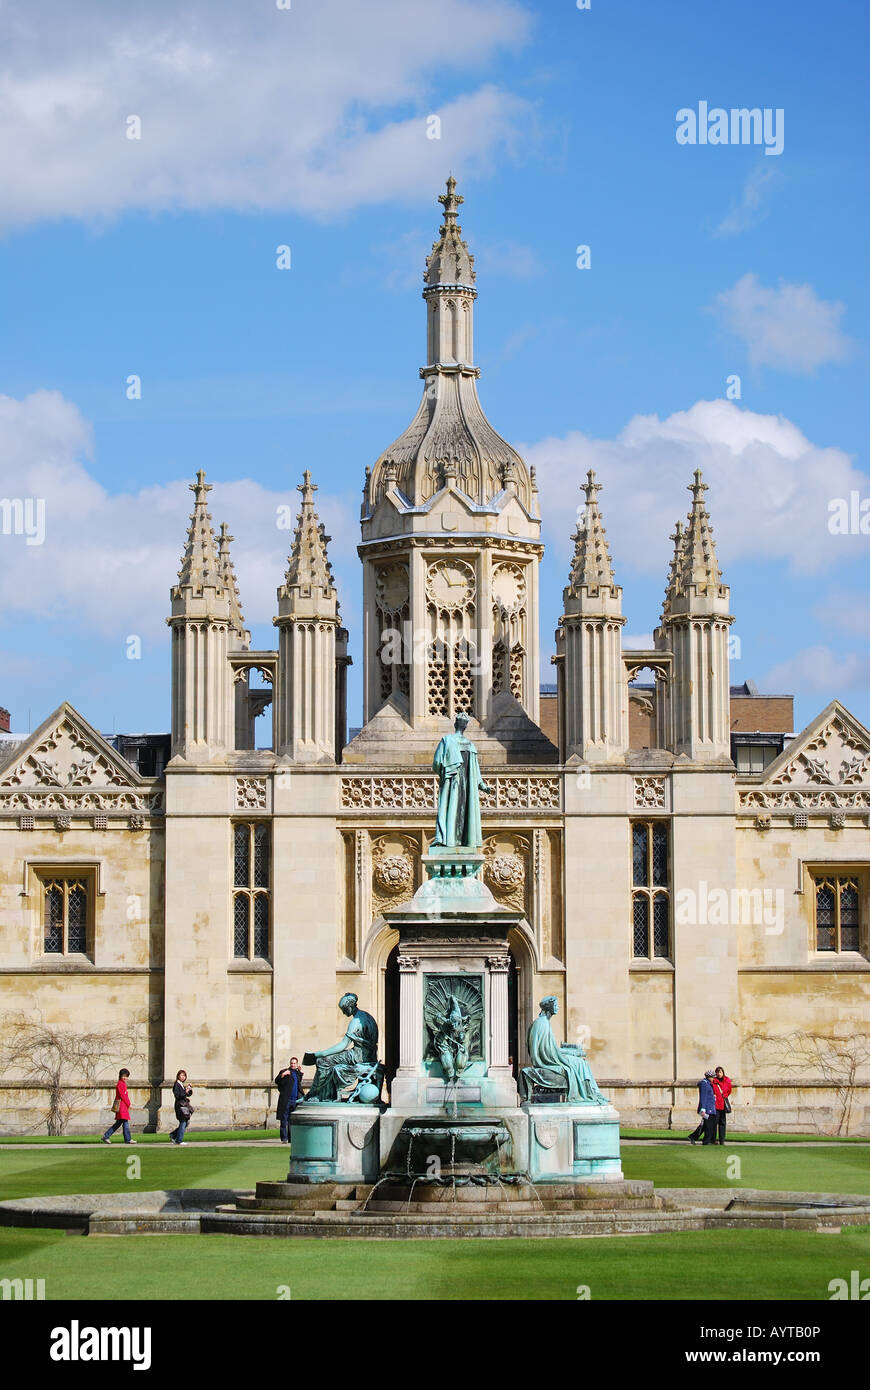 Front Court and Gatehouse, King's College, Cambridge, Cambridgeshire, England, United Kingdom Stock Photo